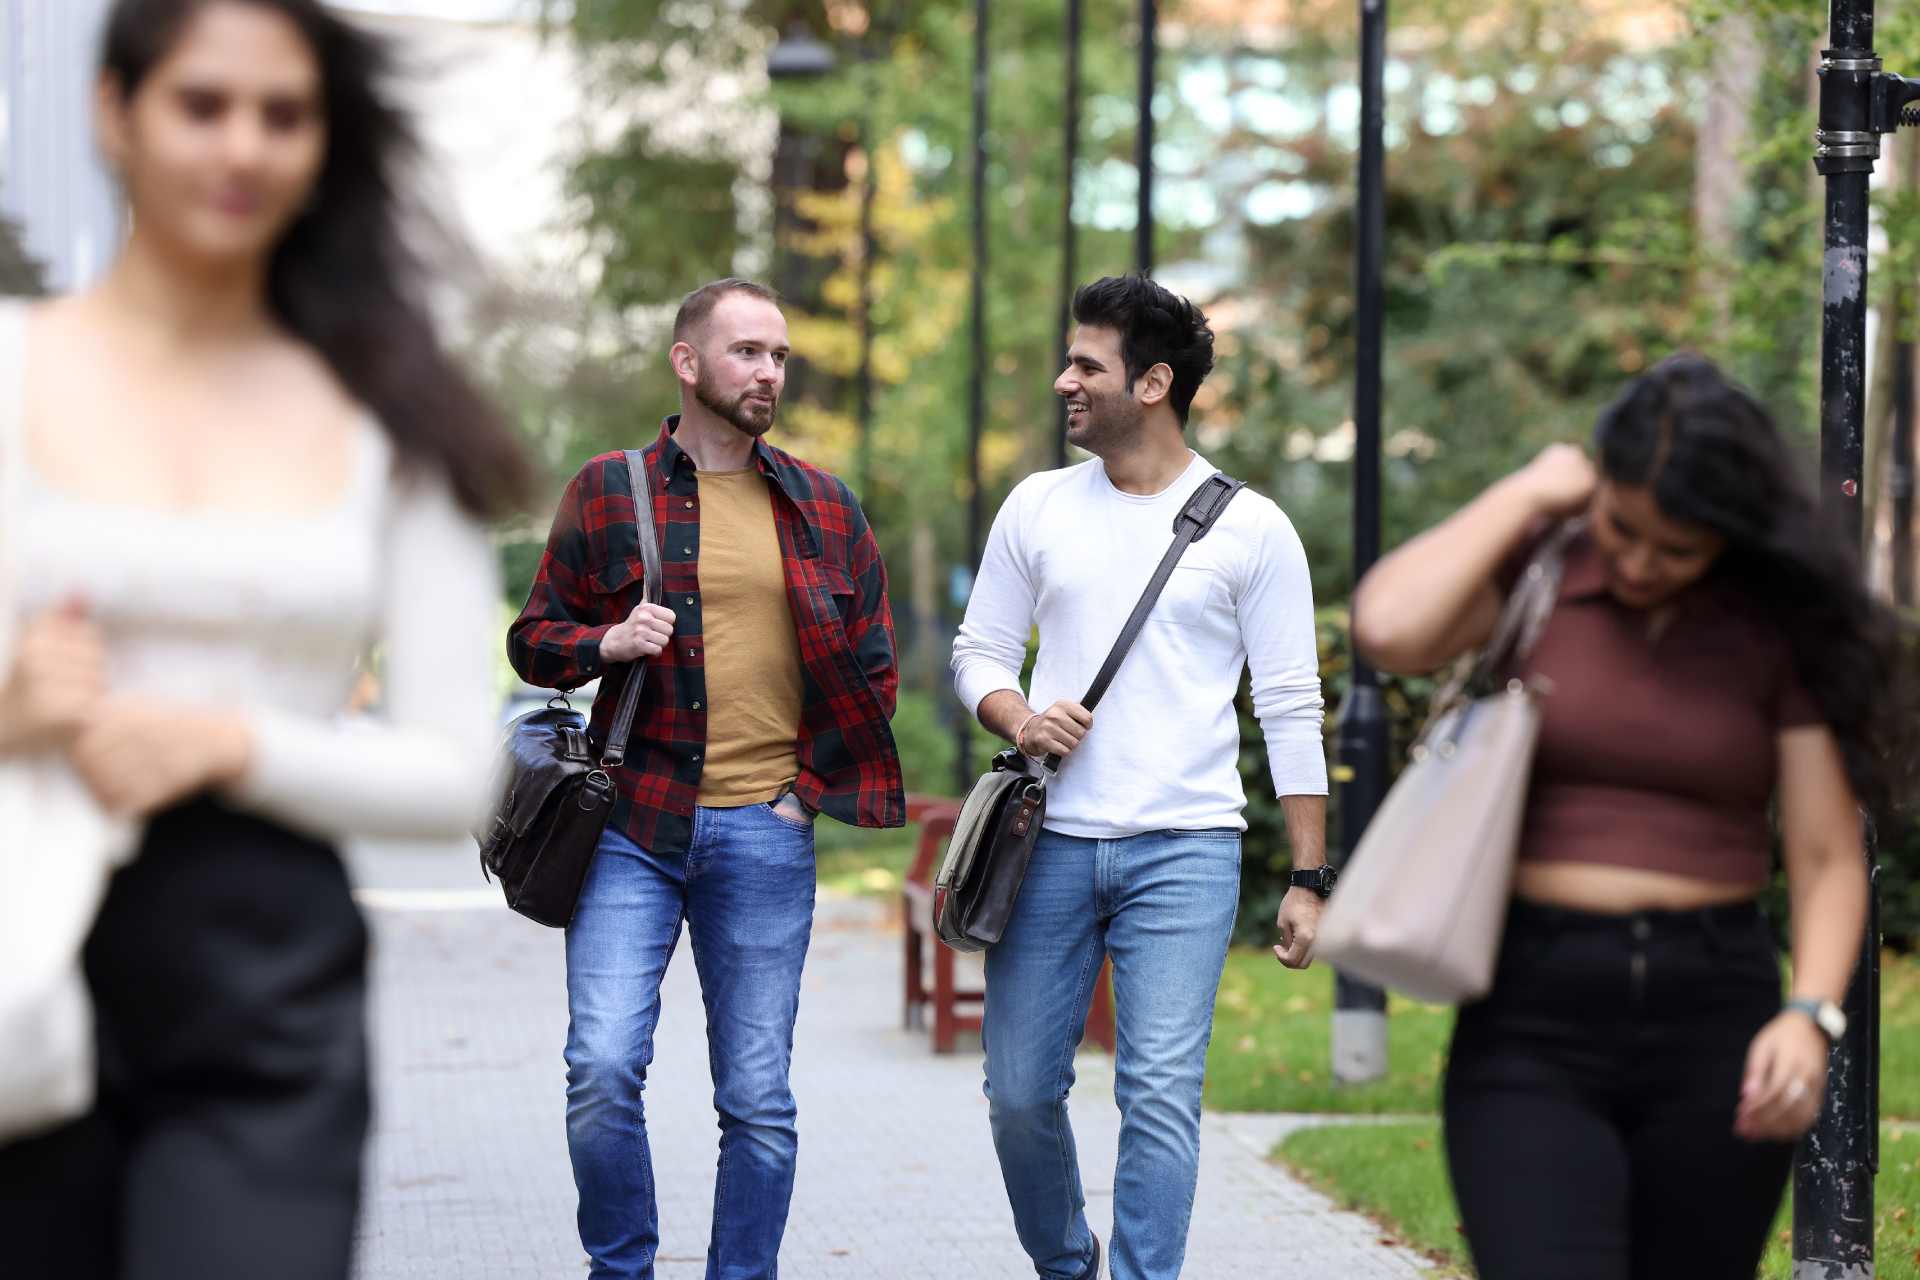 Postgraduate students walking and chatting